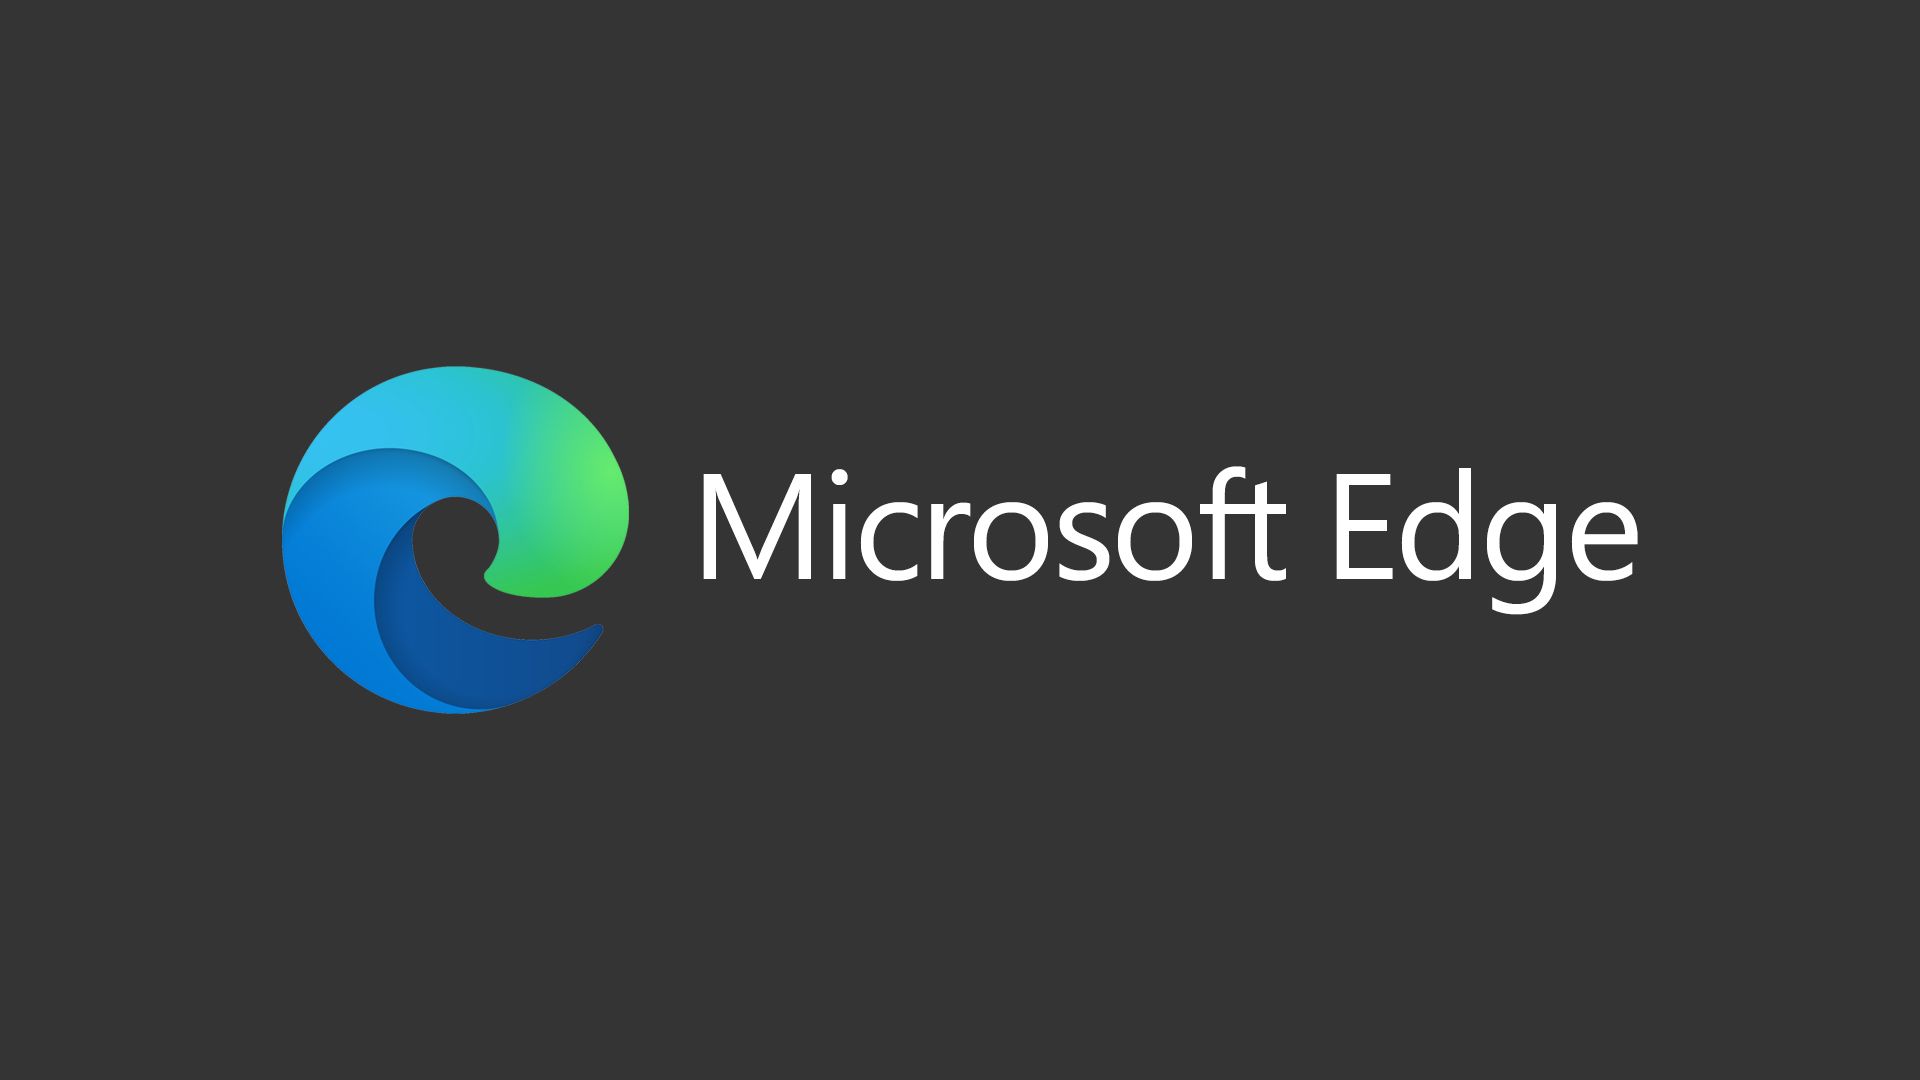 Microsoft Edge обогнал Safari по популярности